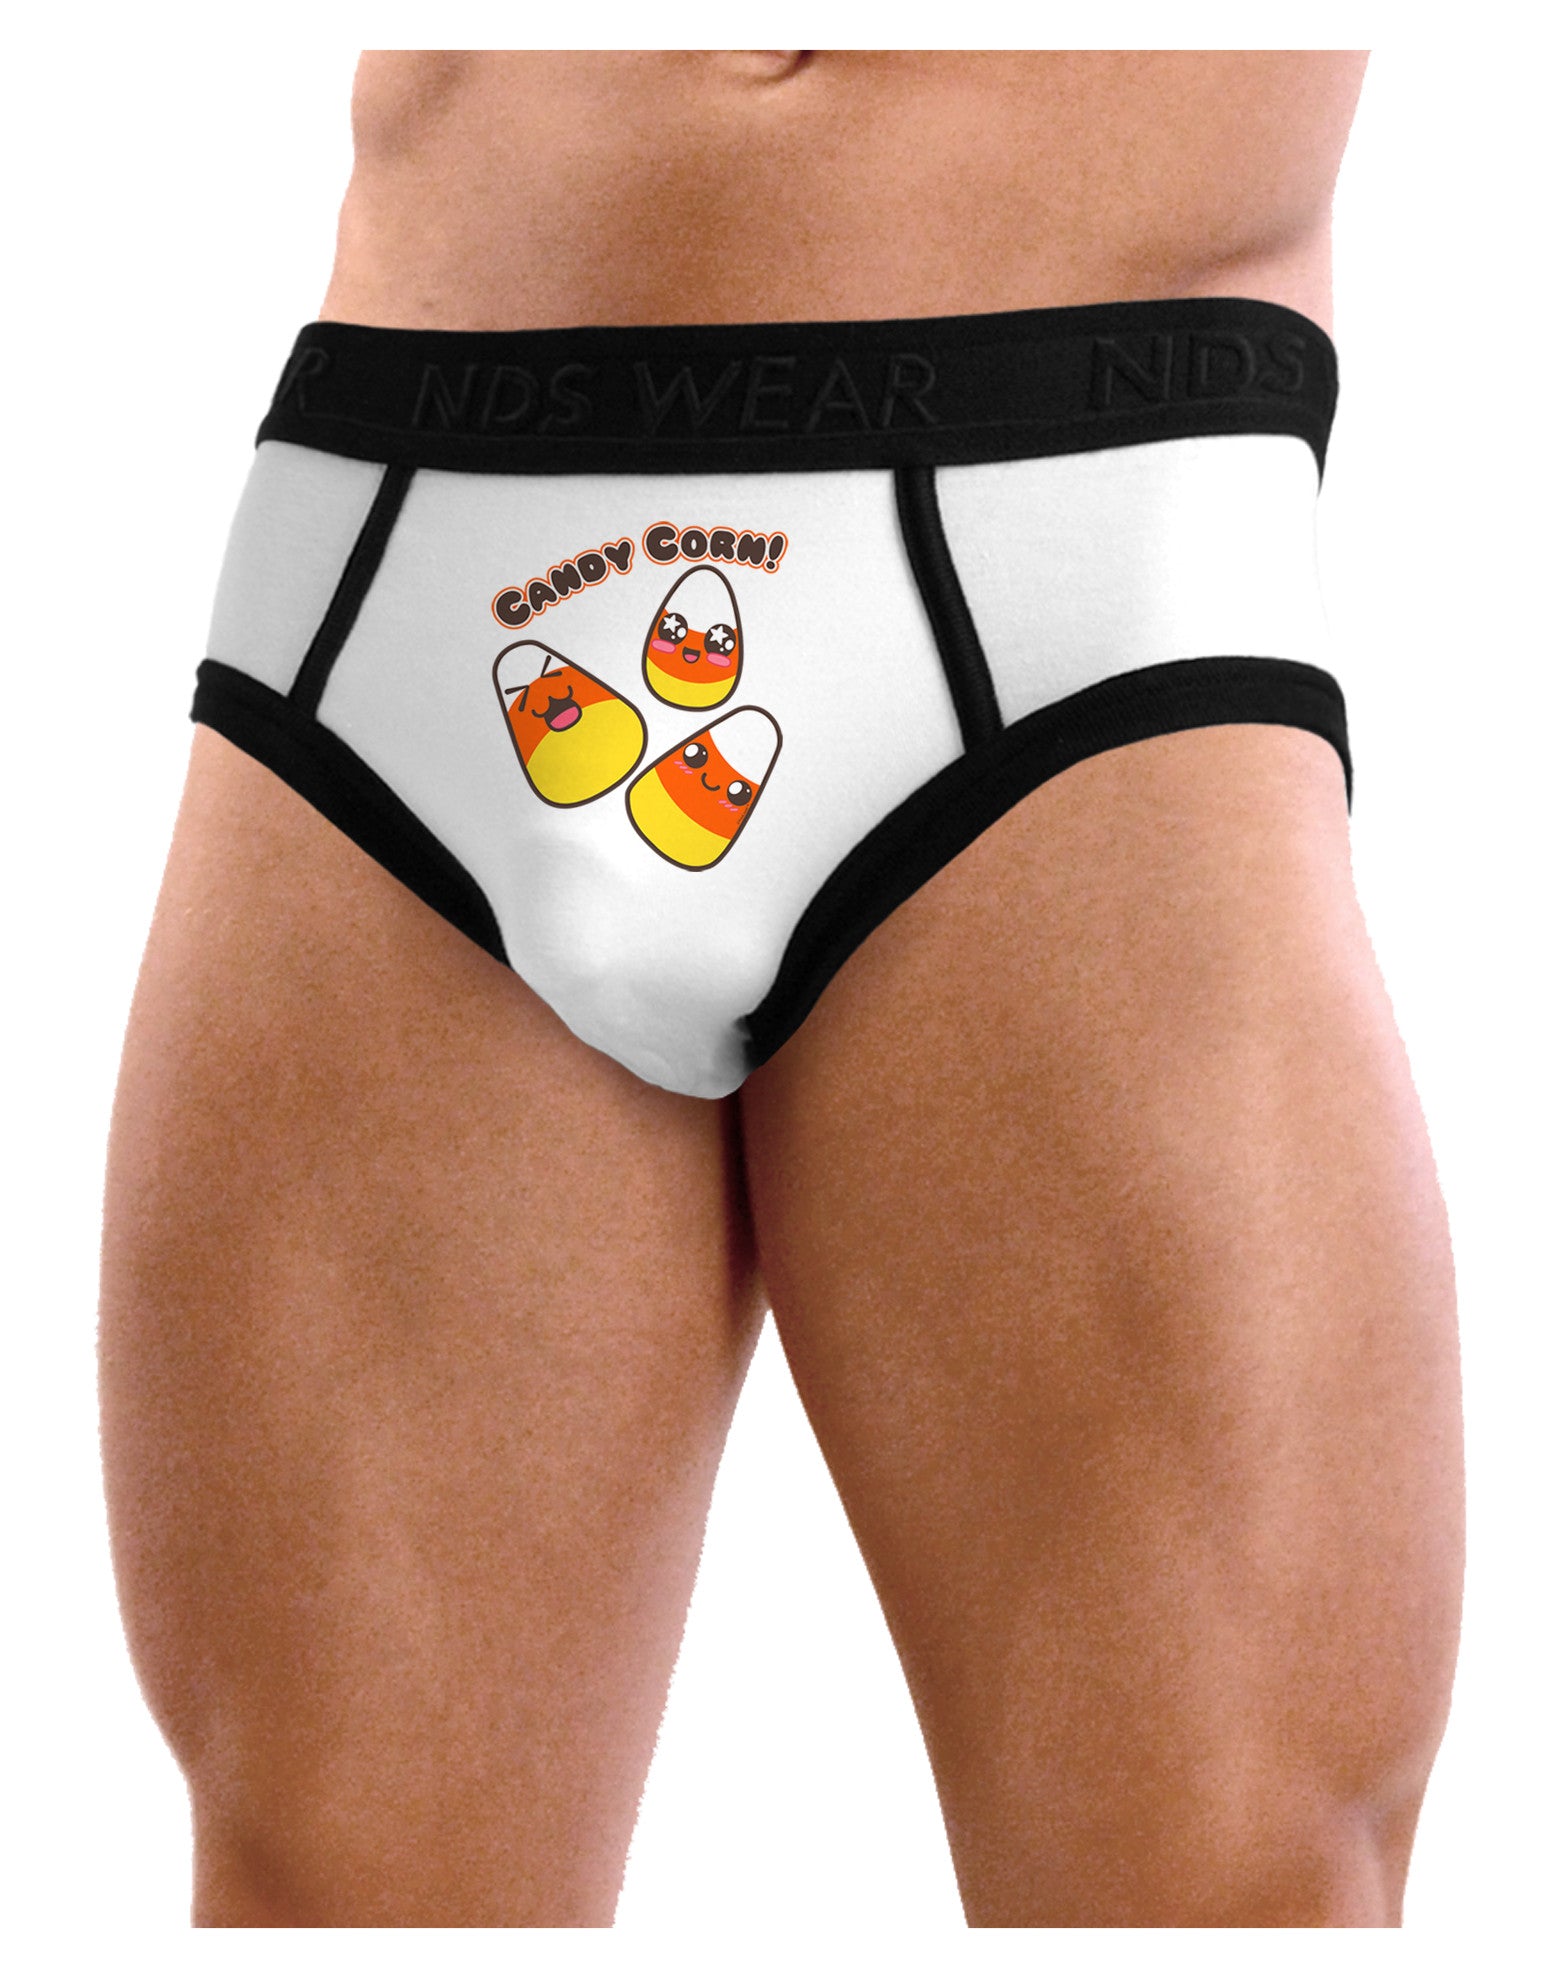 Cute Kawaii Candy Corn Halloween Mens NDS Wear Briefs Underwear - Davson  Sales